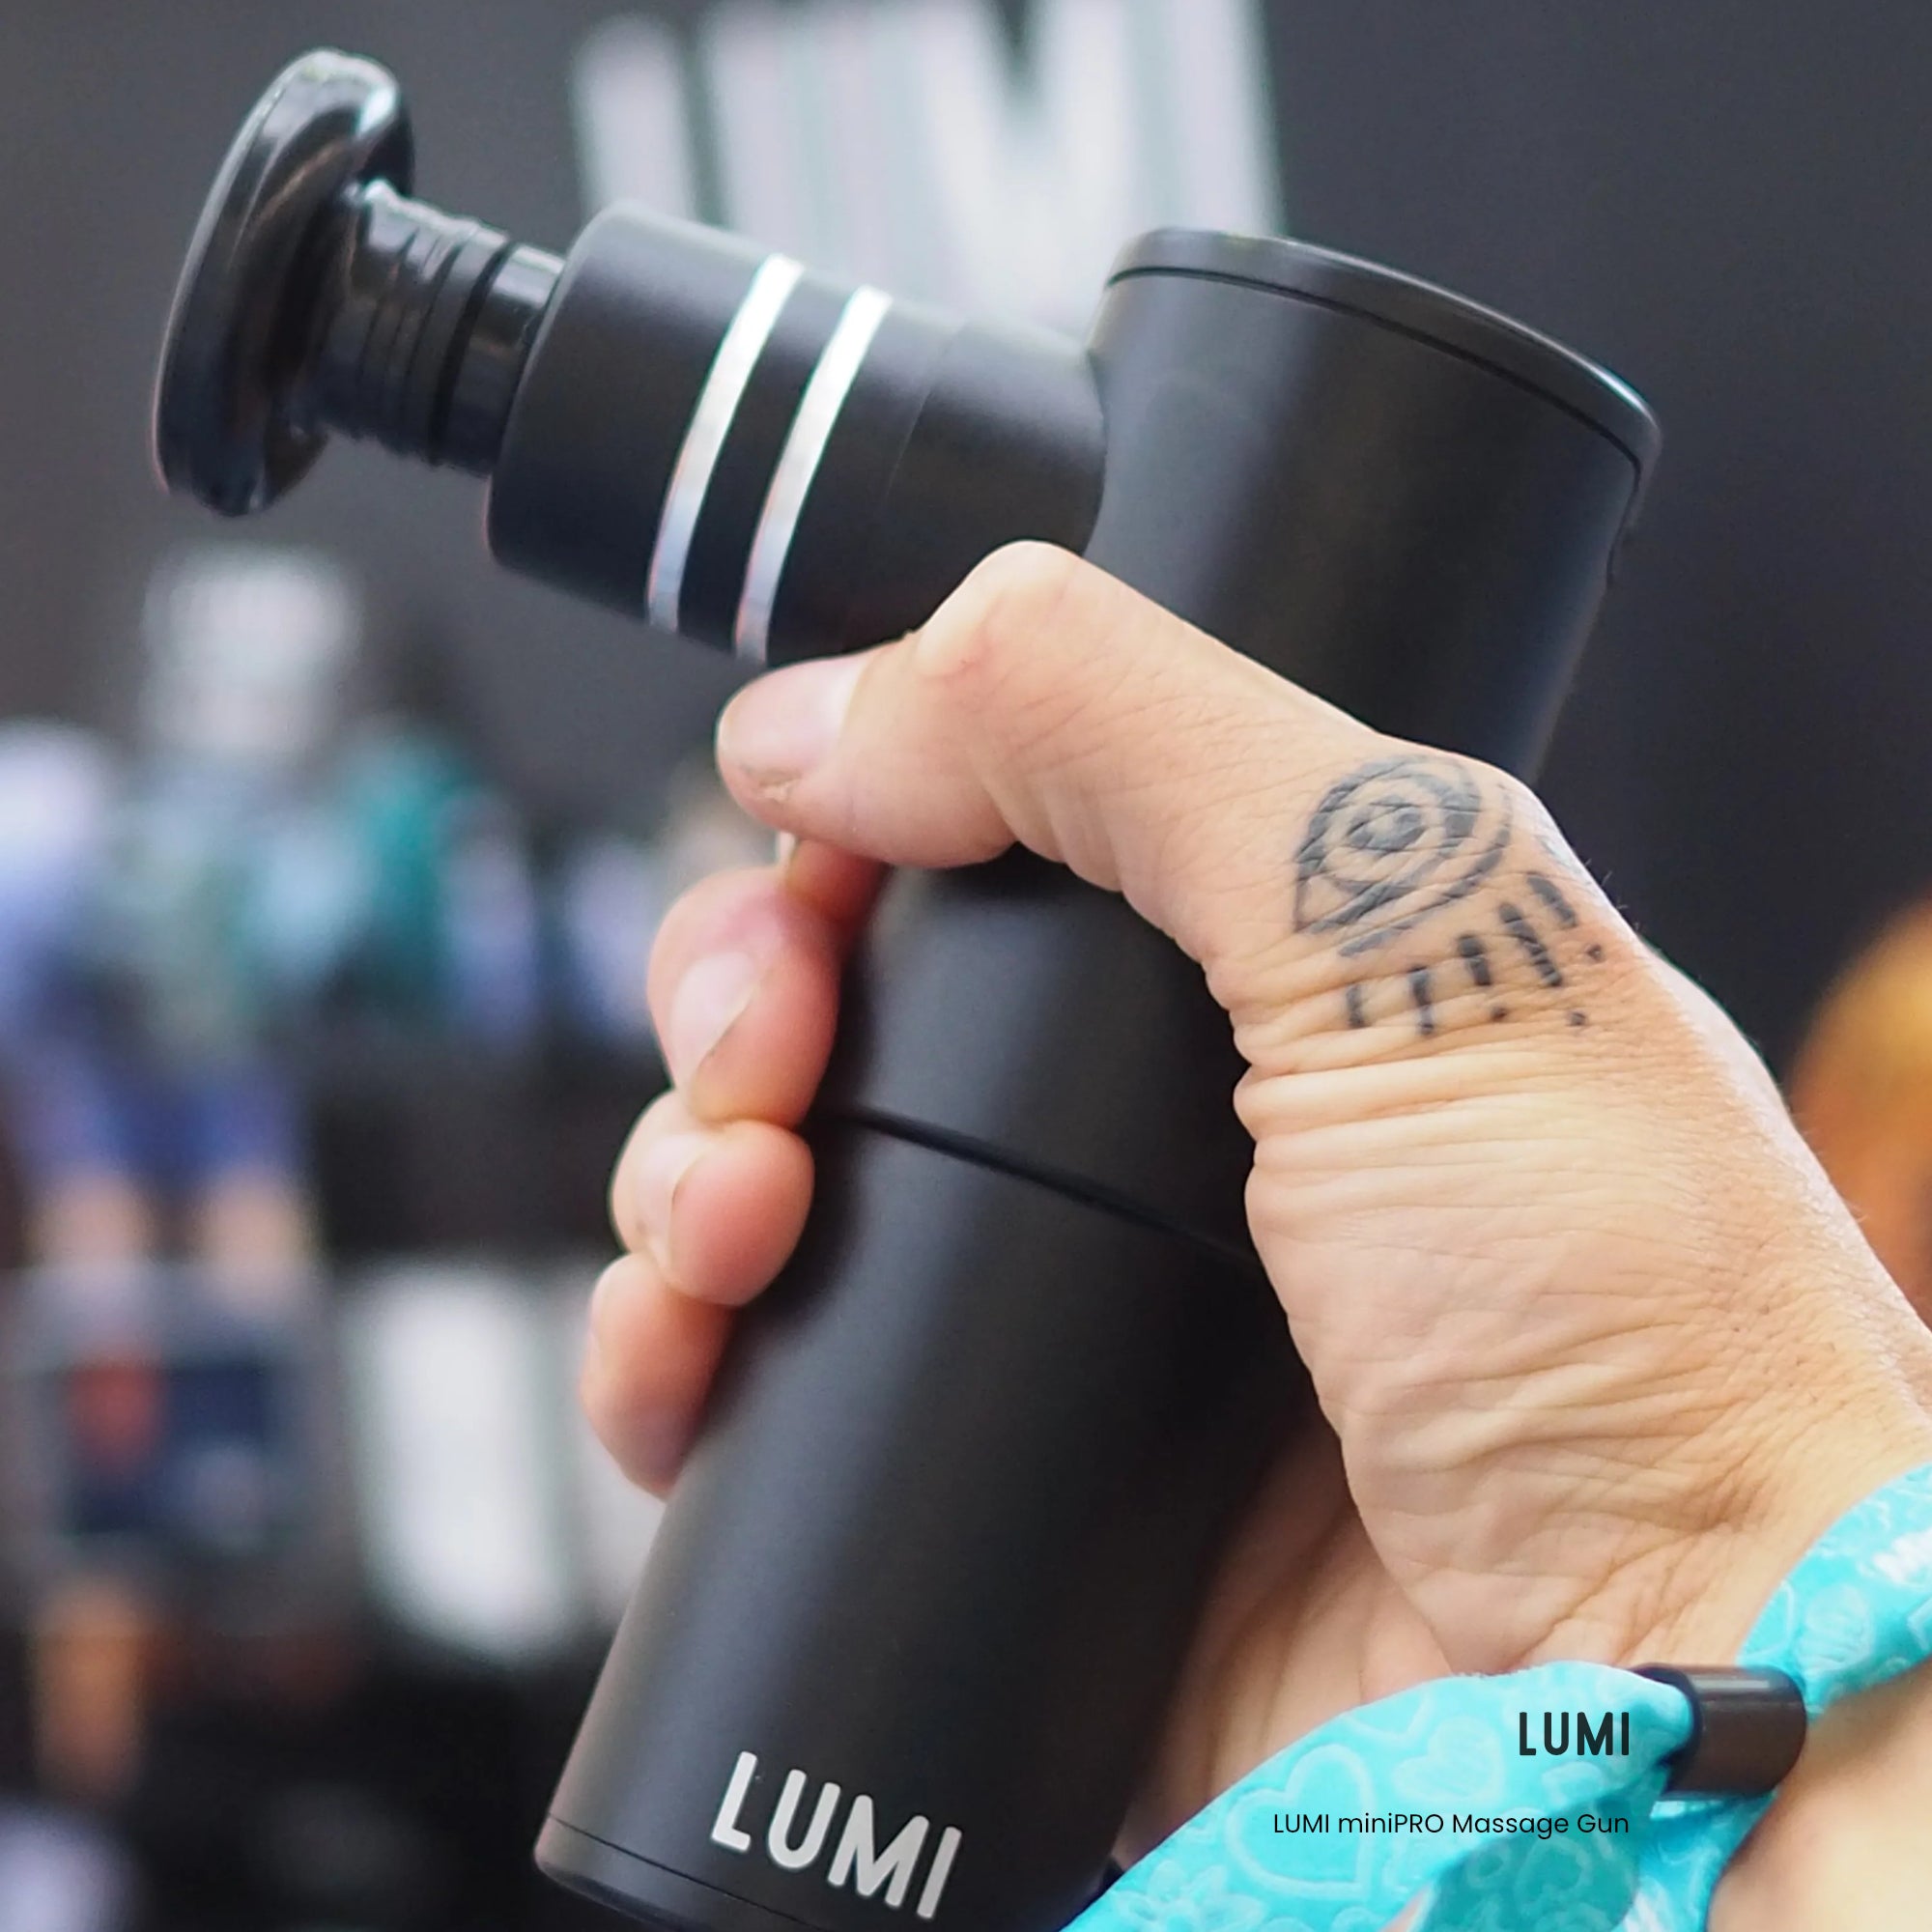 3 reasons why the LUMI miniPRO is the No.1 mini massage device